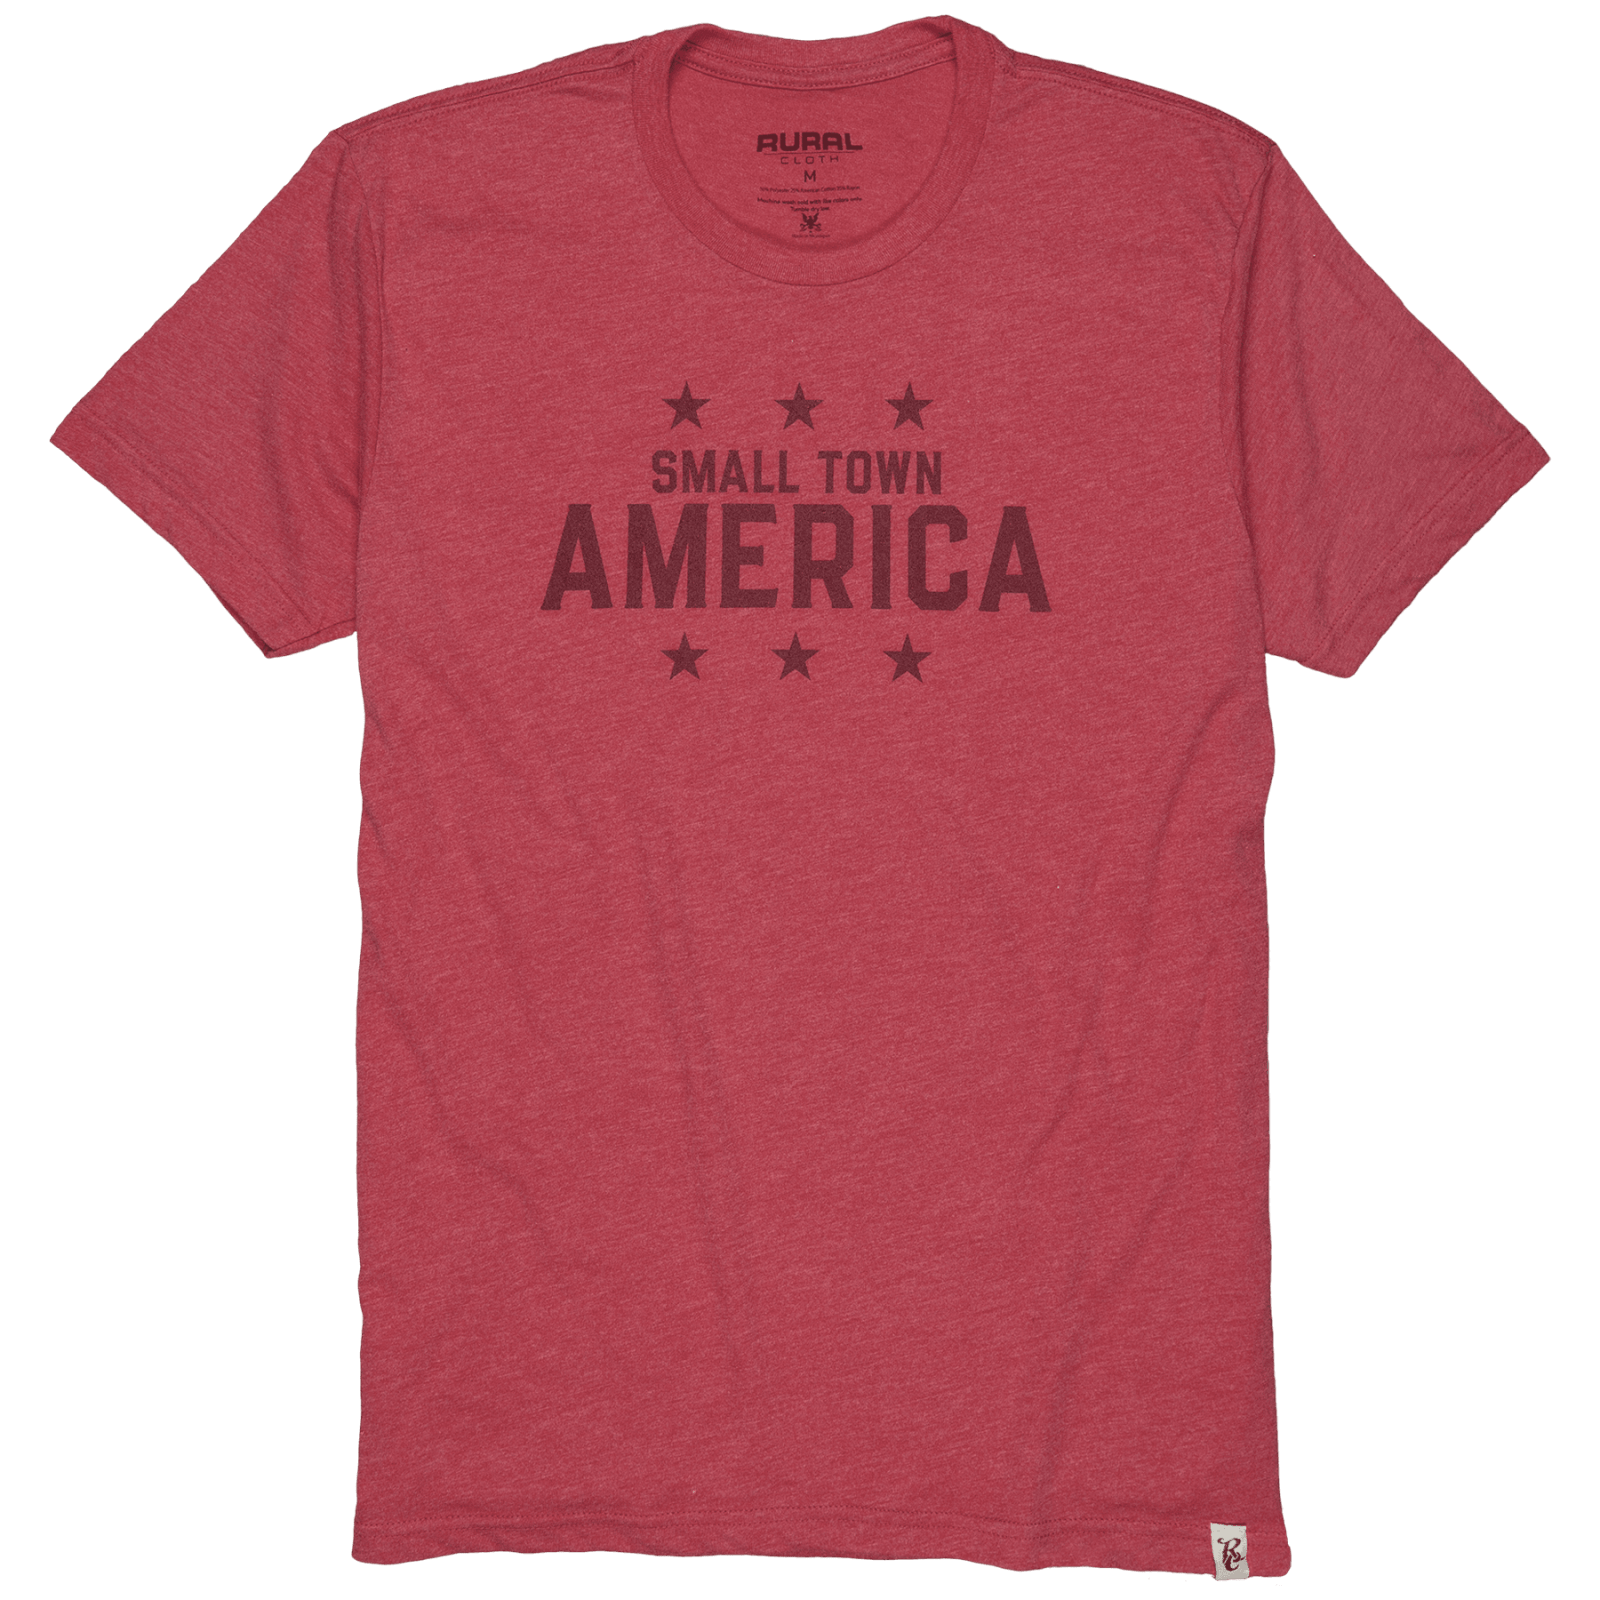 Rural Cloth Shirts Small Town America